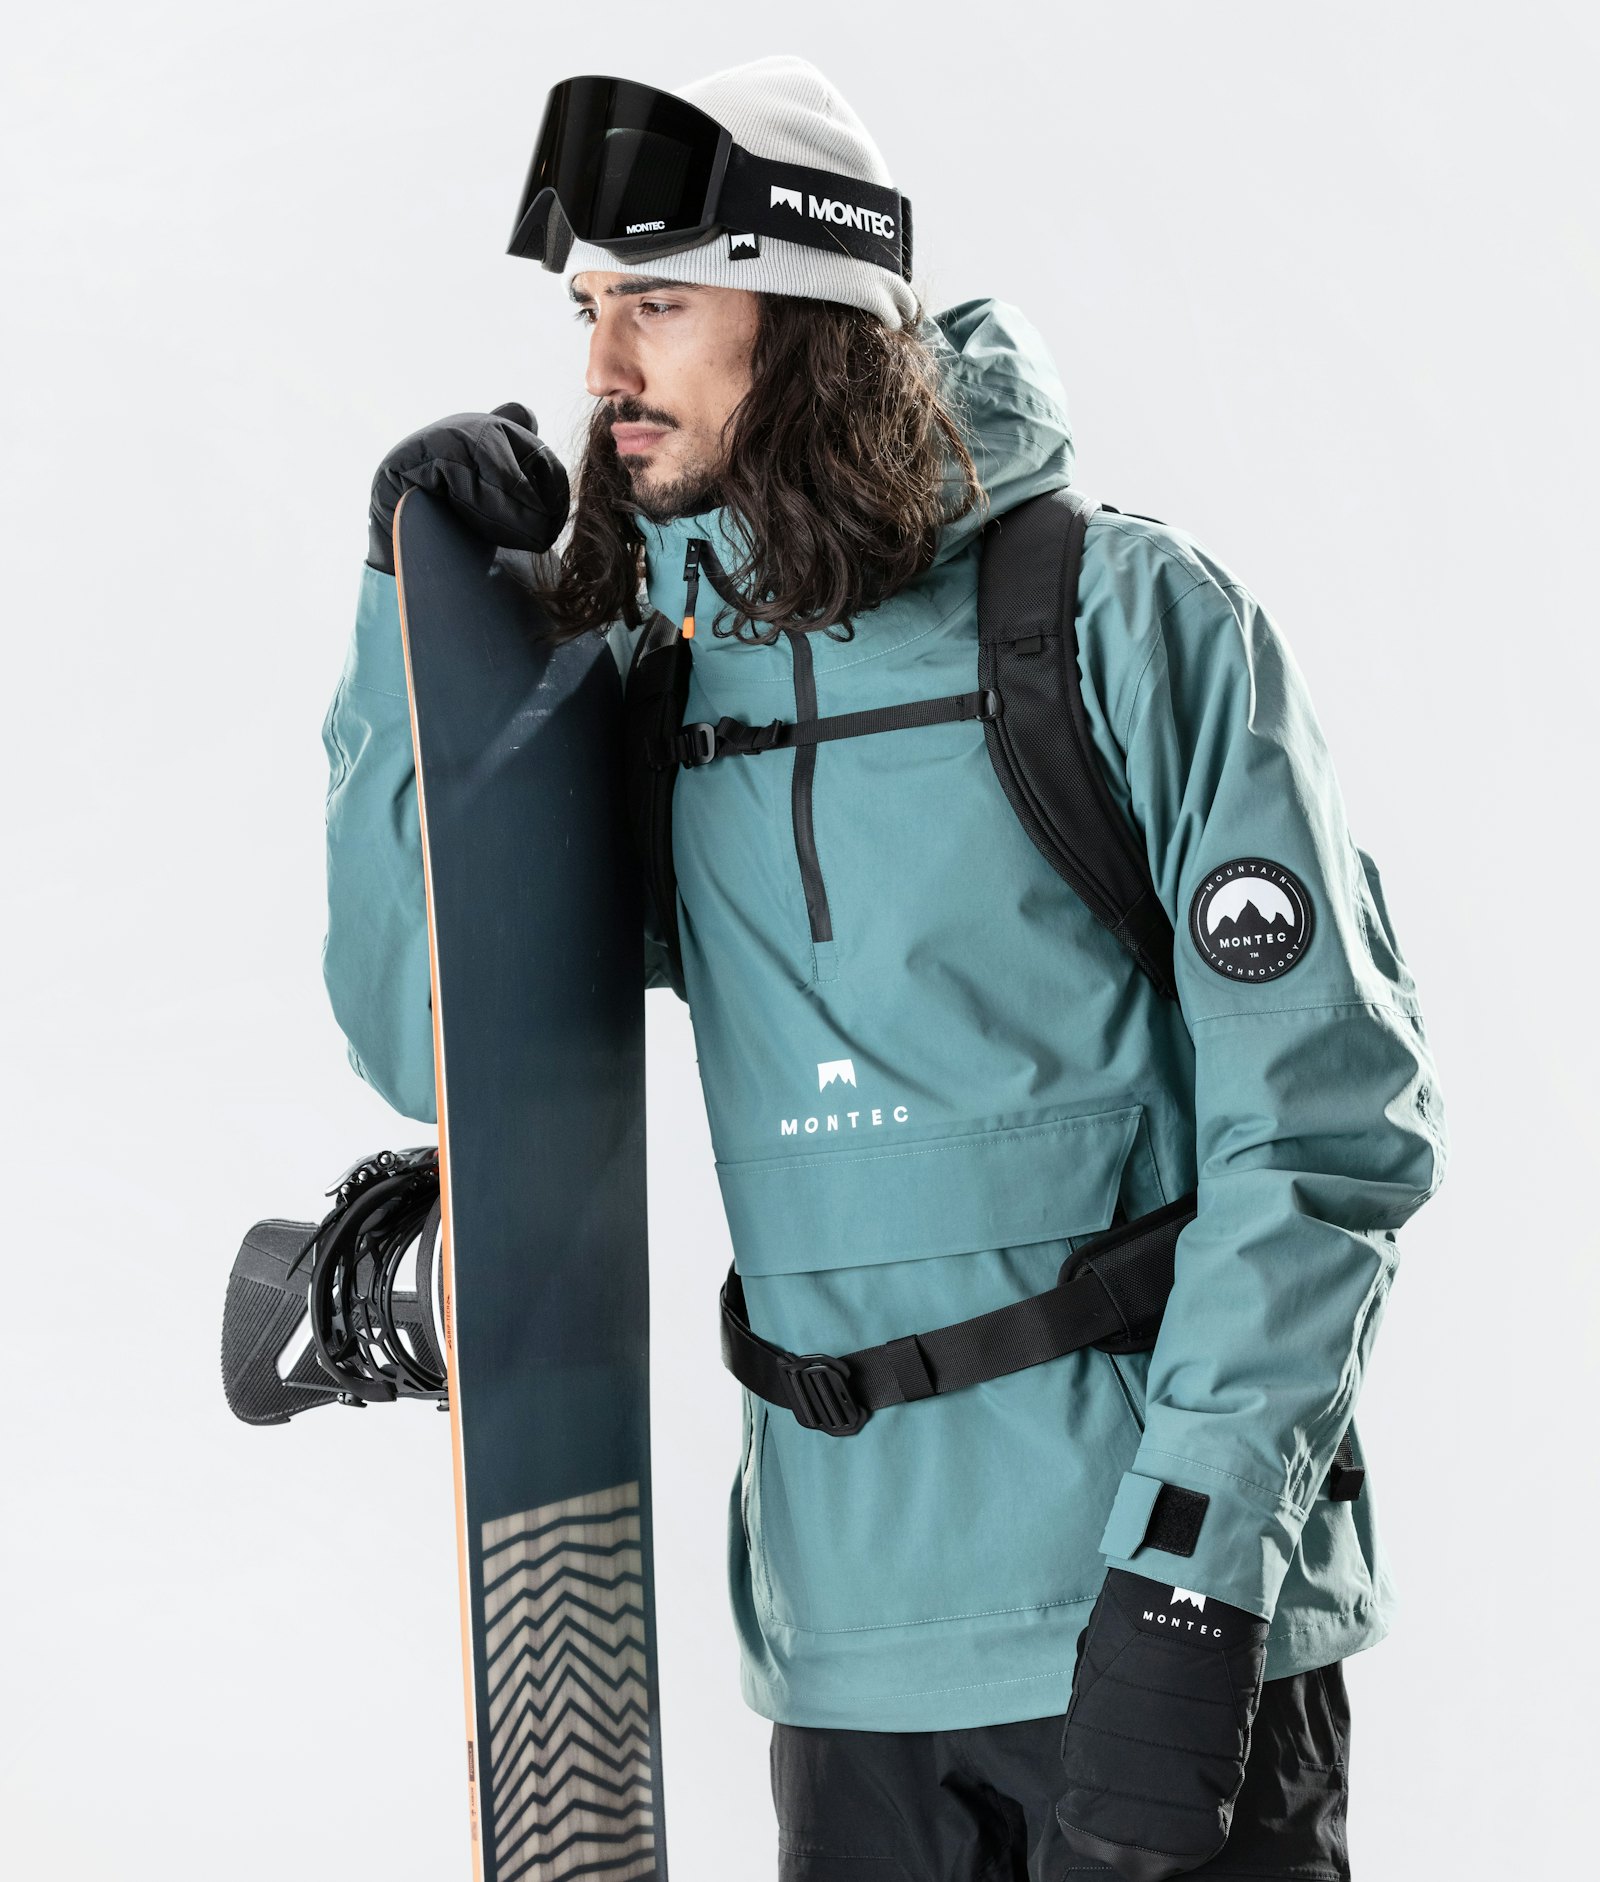 Typhoon 2020 Veste Snowboard Homme Atlantic